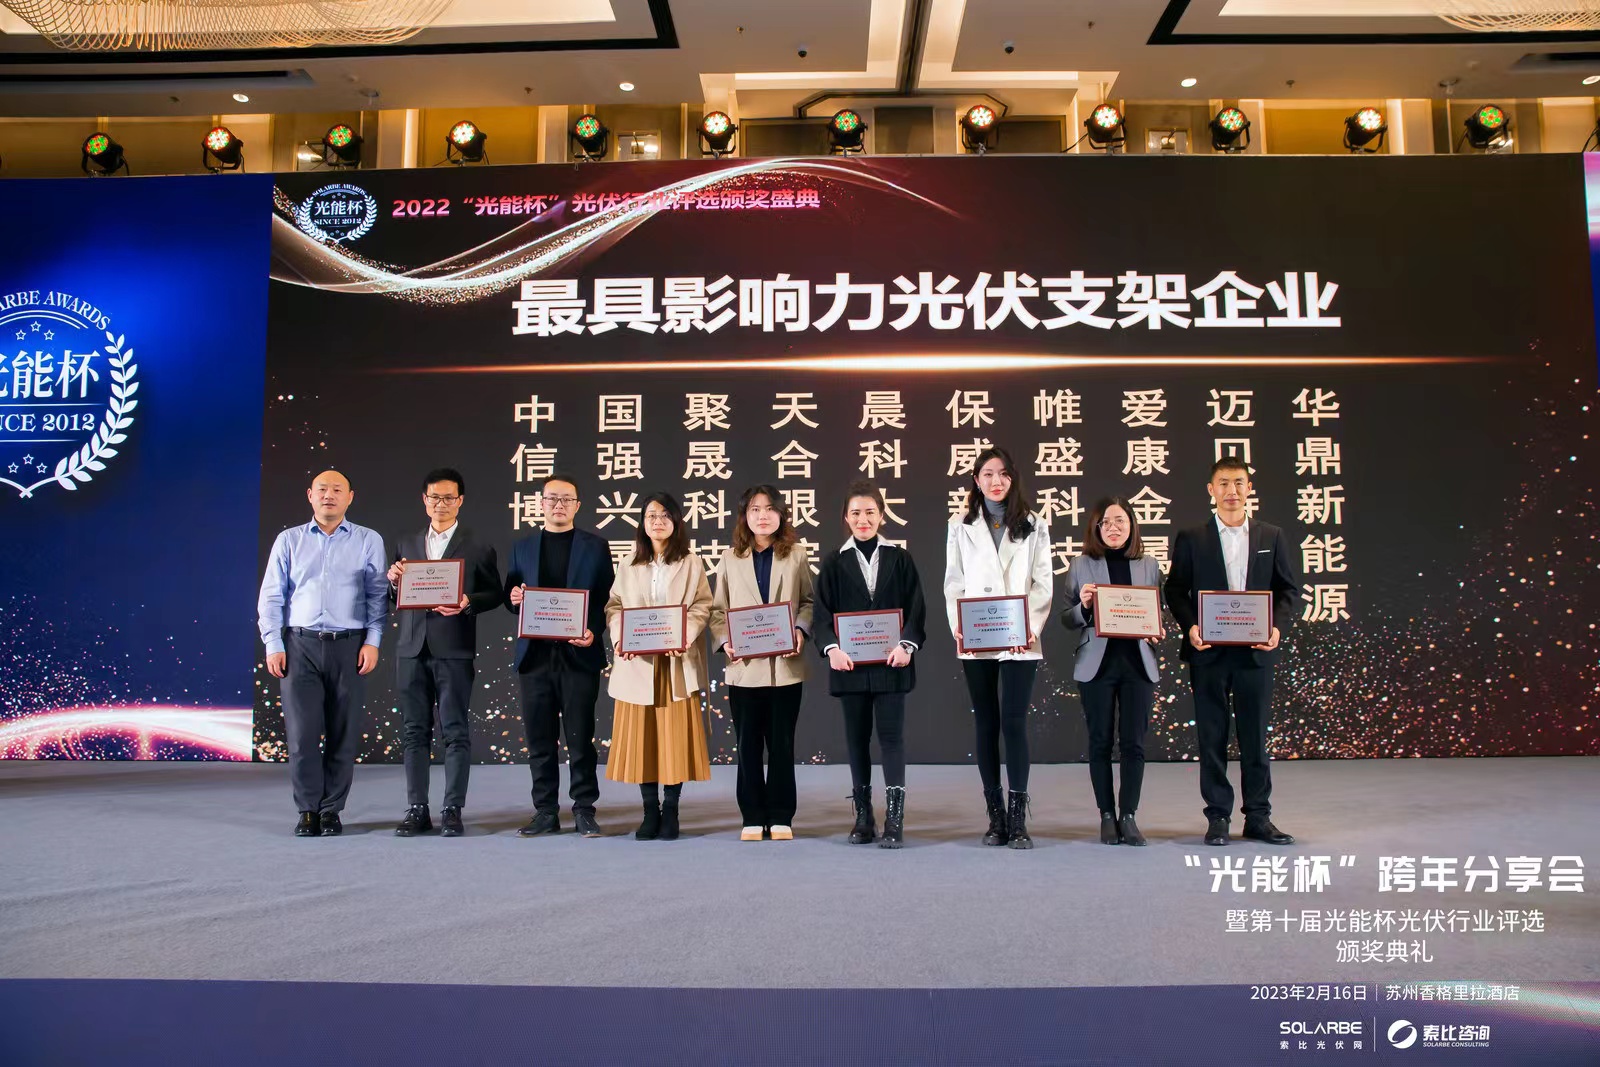 Congratulations! Shanghai CHIKO won the most influential solar bracket enterprise in 2022